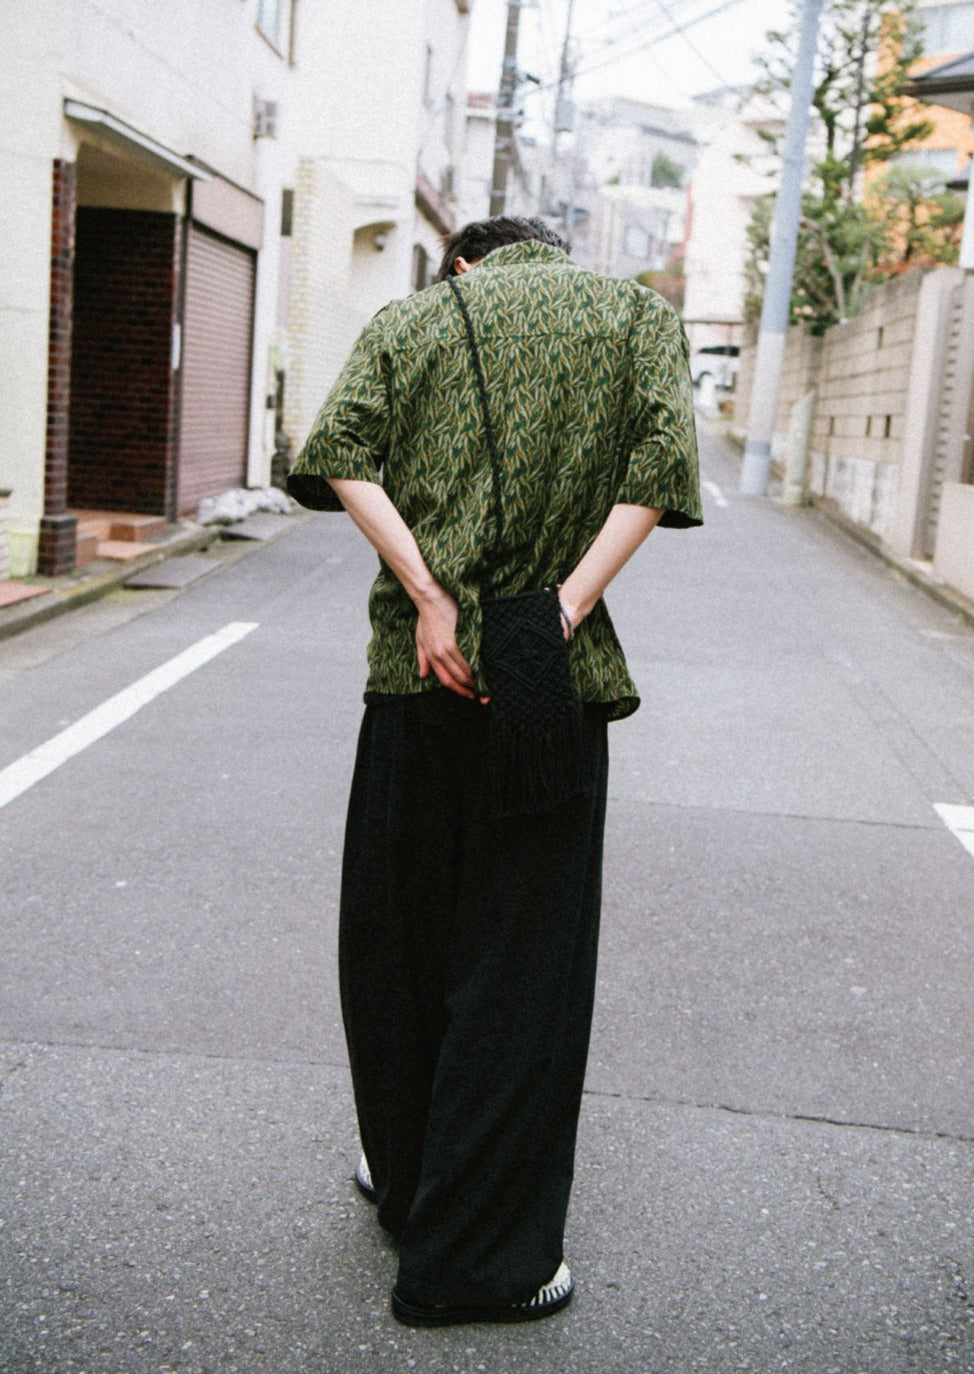 YOSHIYOYI / FS-052 Retro anti-wrinkle printed short-sleeved